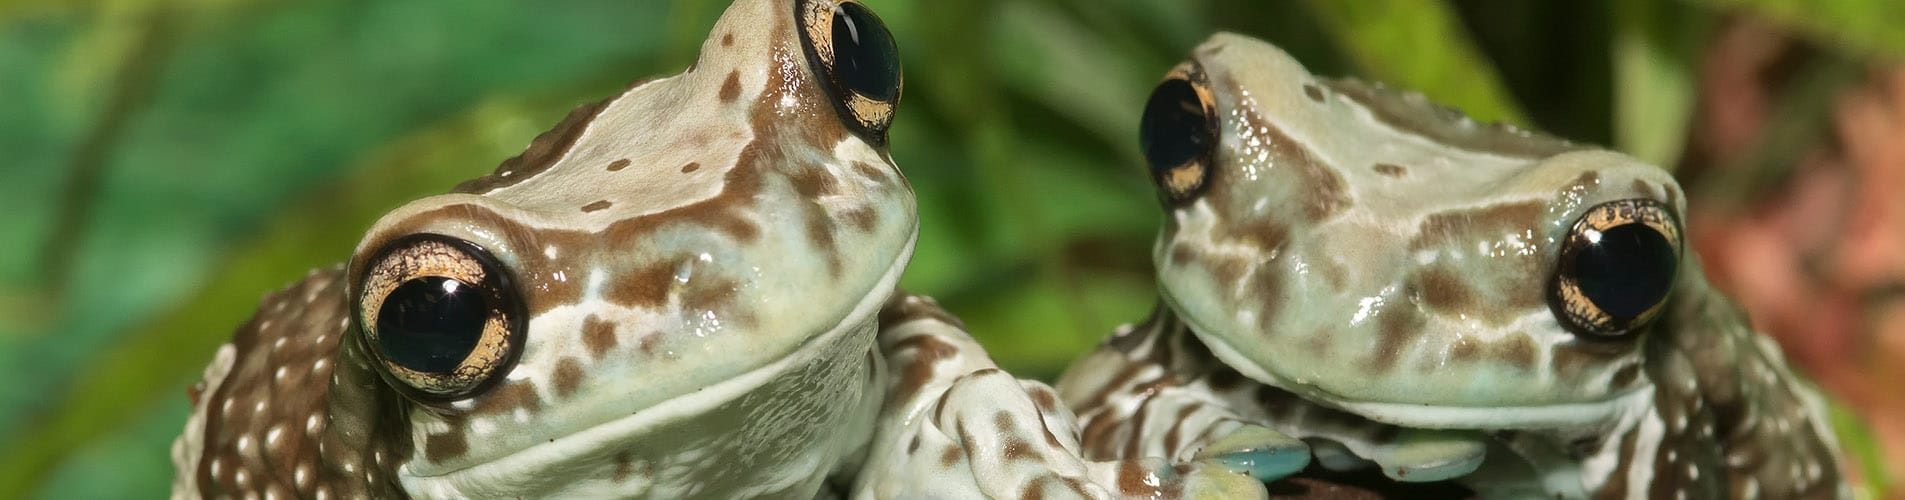 Two Amazon Milk Frogs